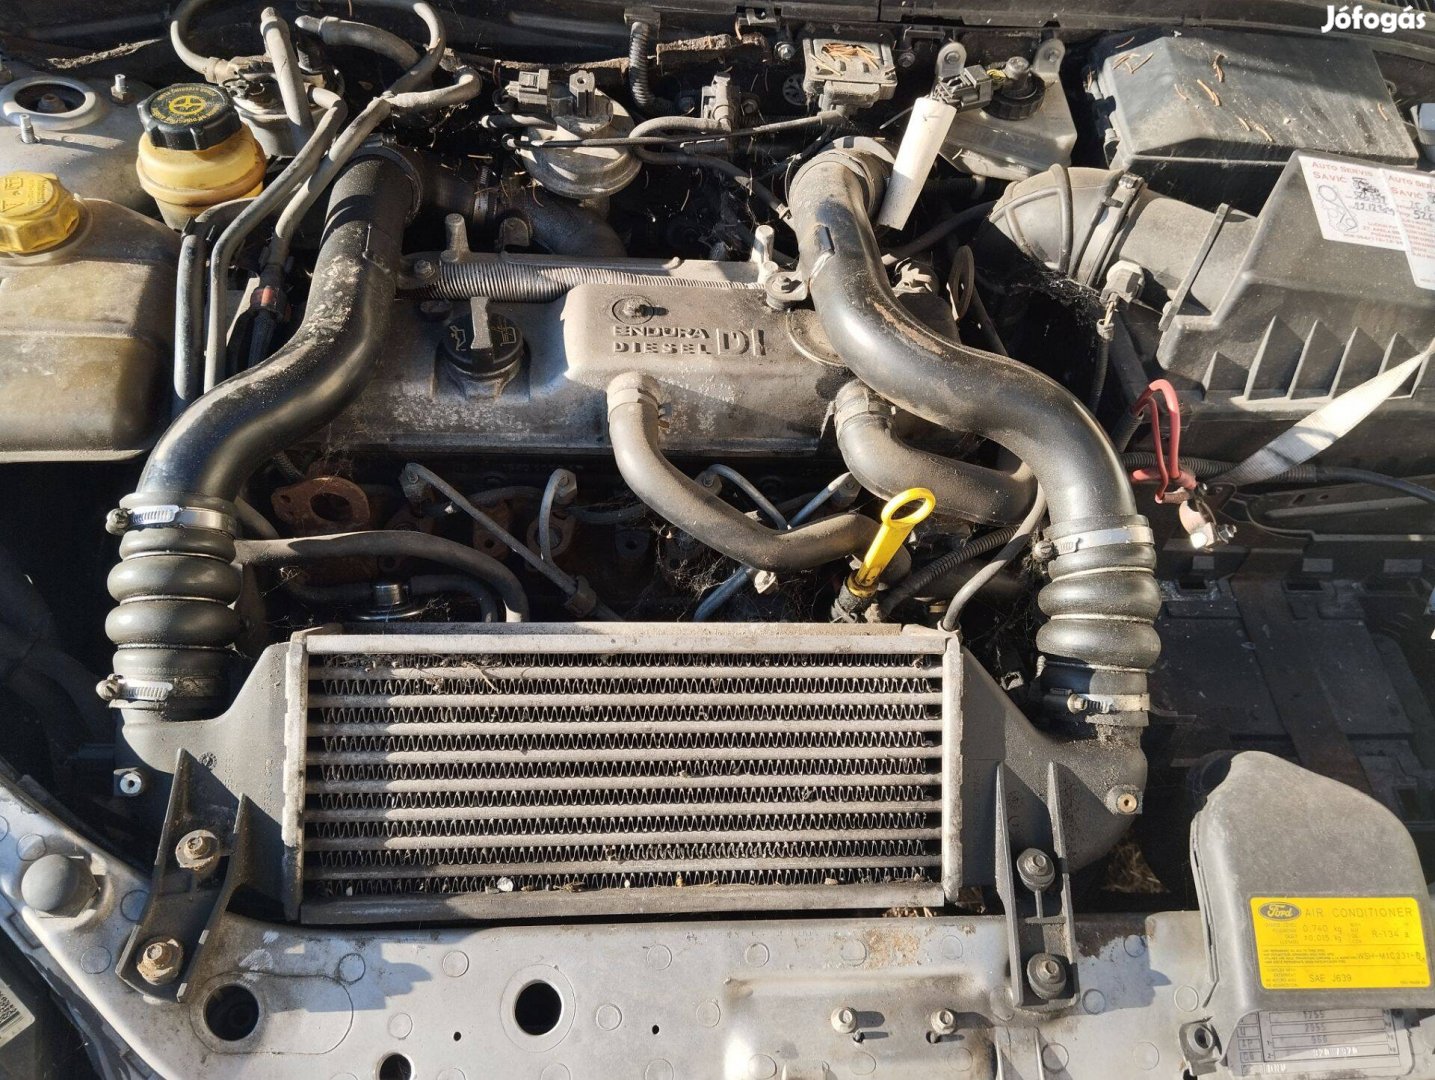 Ford Focus 1.8 Tddi motor